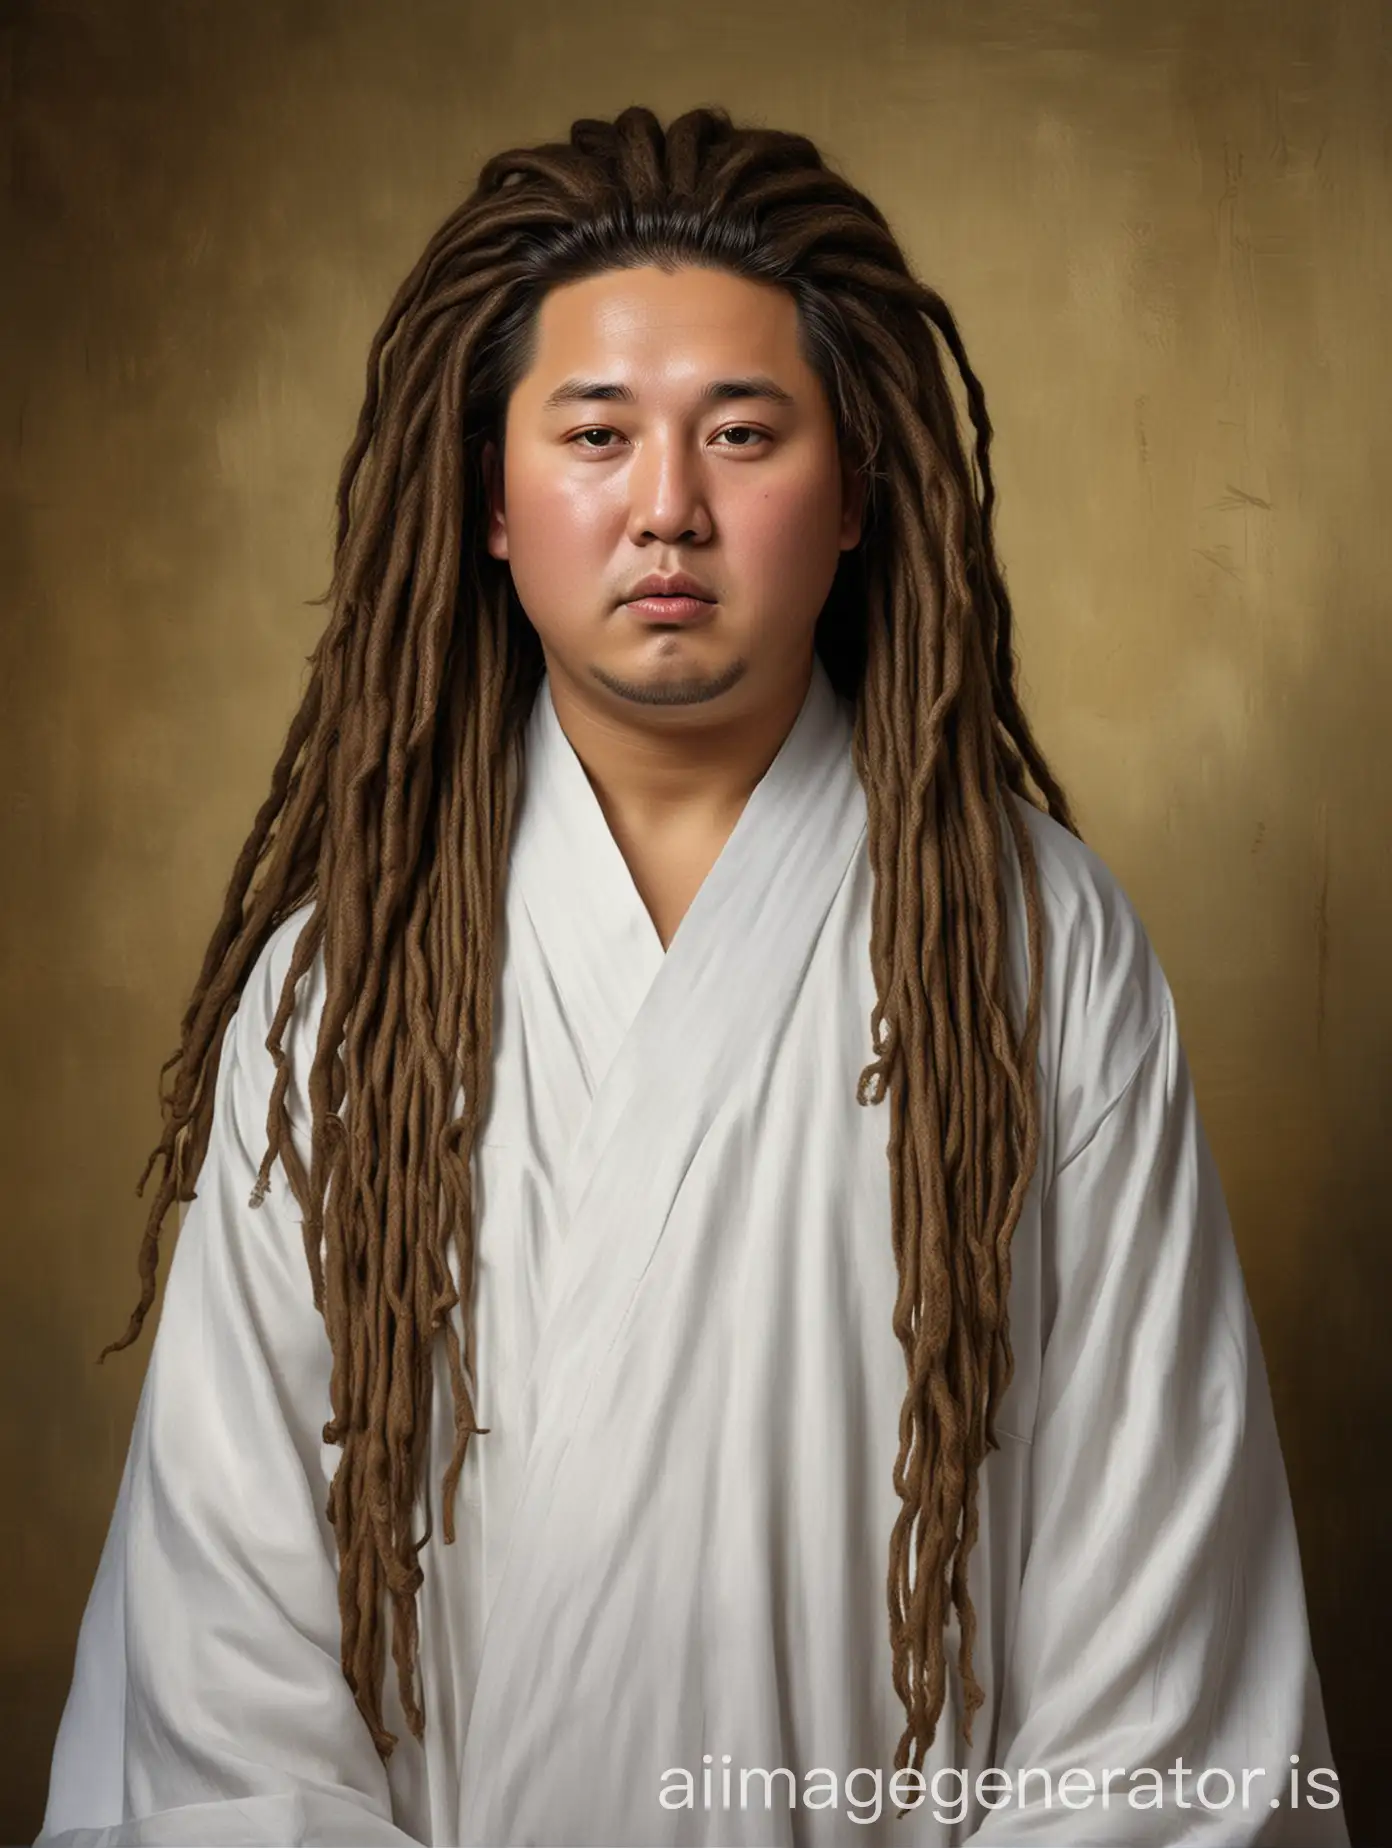 kim jong un face dreadlocks hair pose like painting monalisa wearing white robe